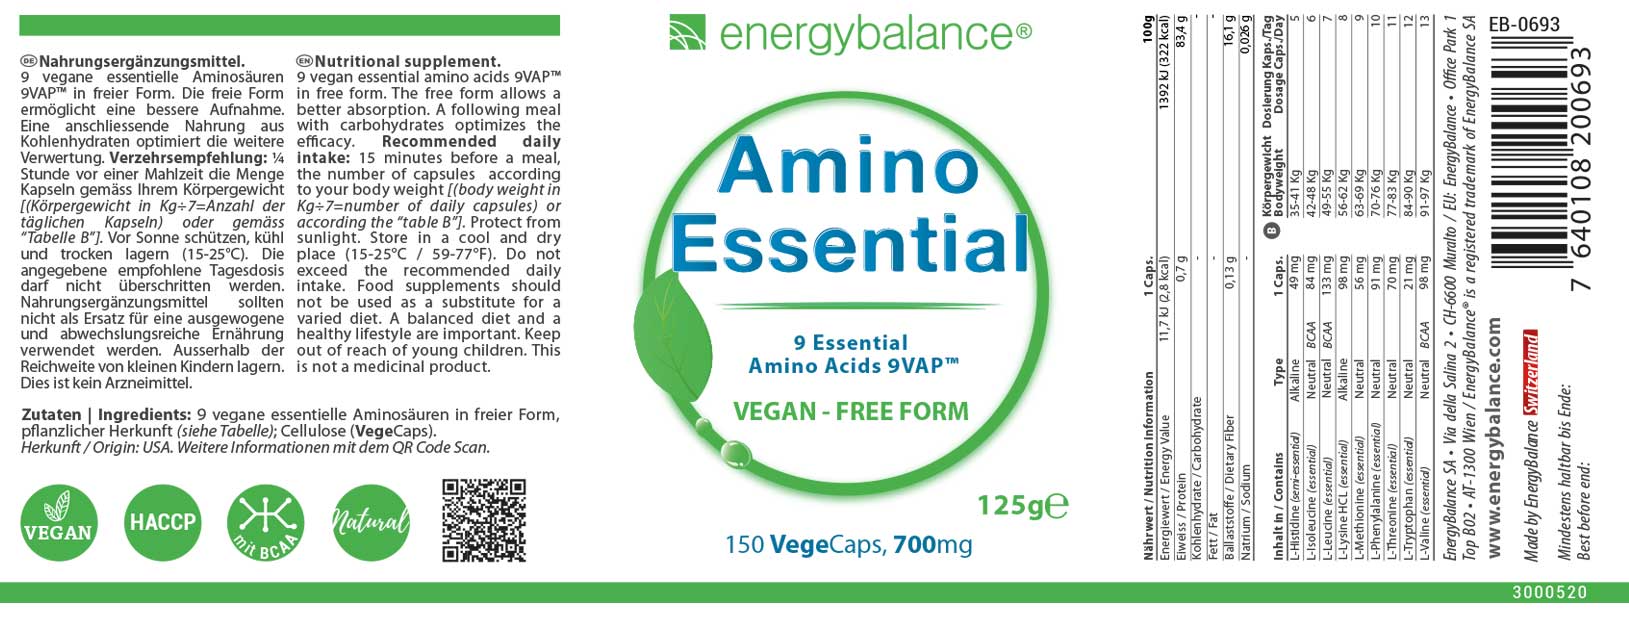 Amino Essential Etikett von Energybalance